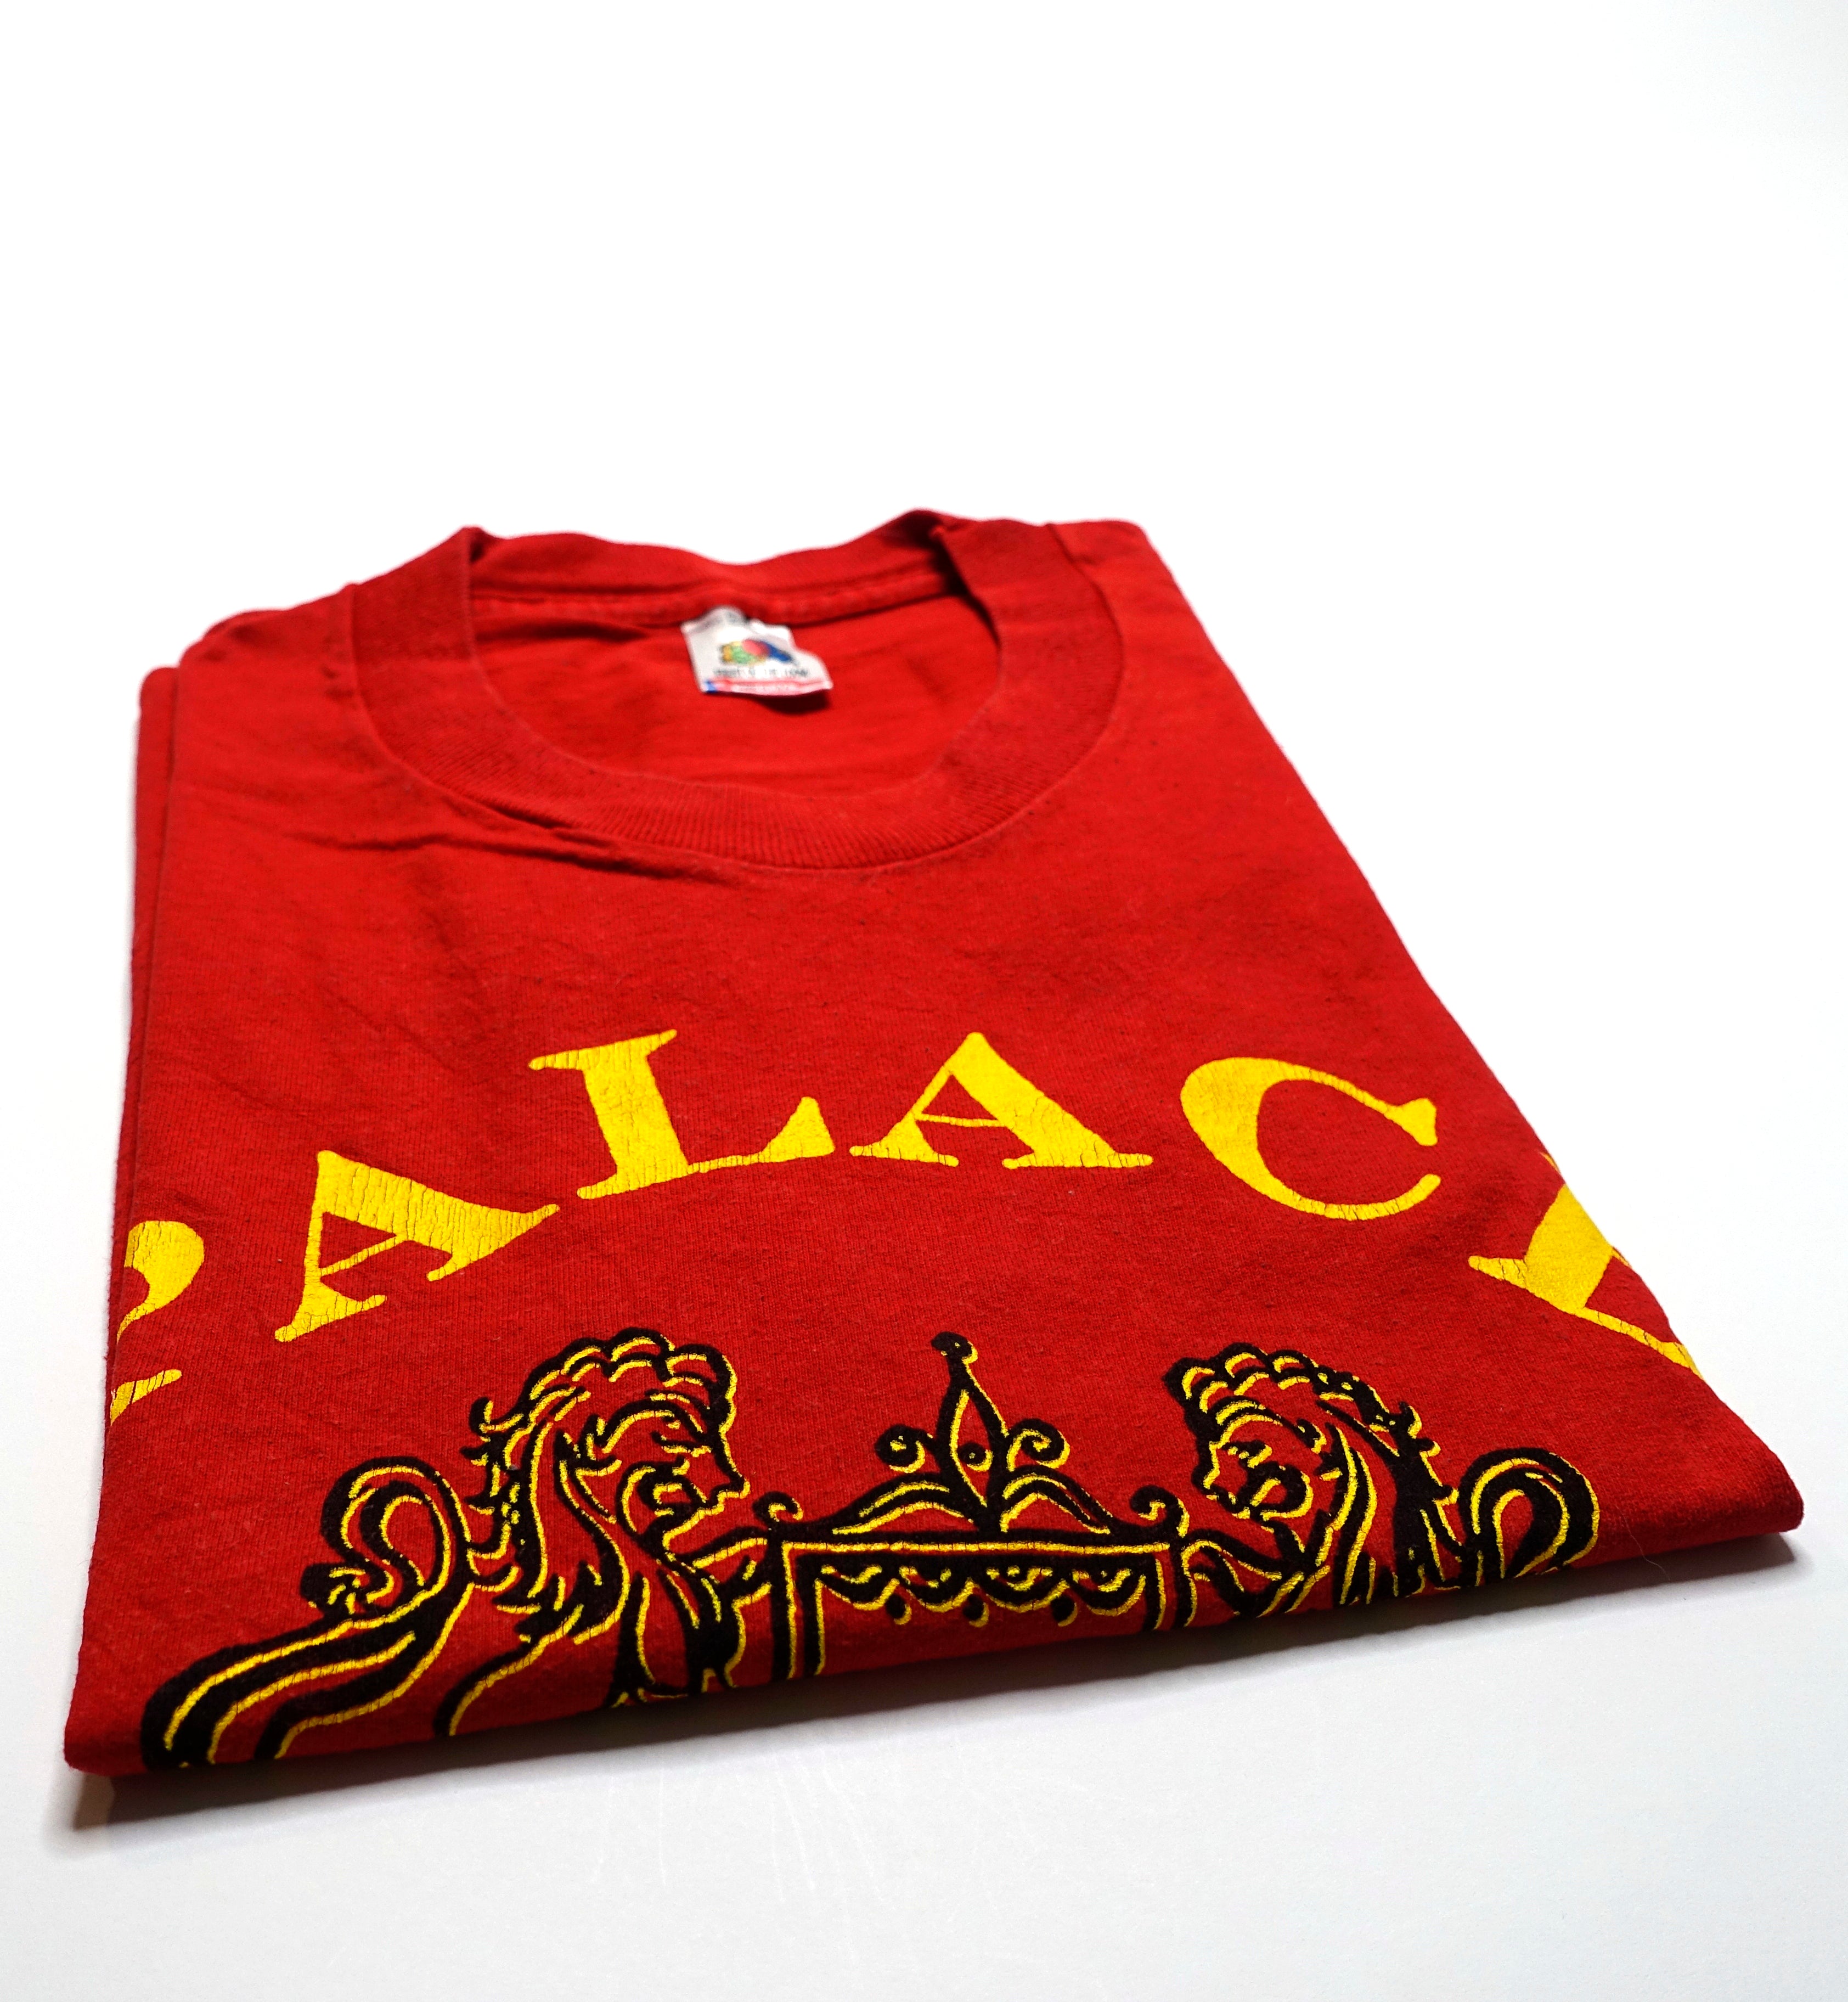 Palace Music - Red Lion Crest 90's Tour Shirt Size Large